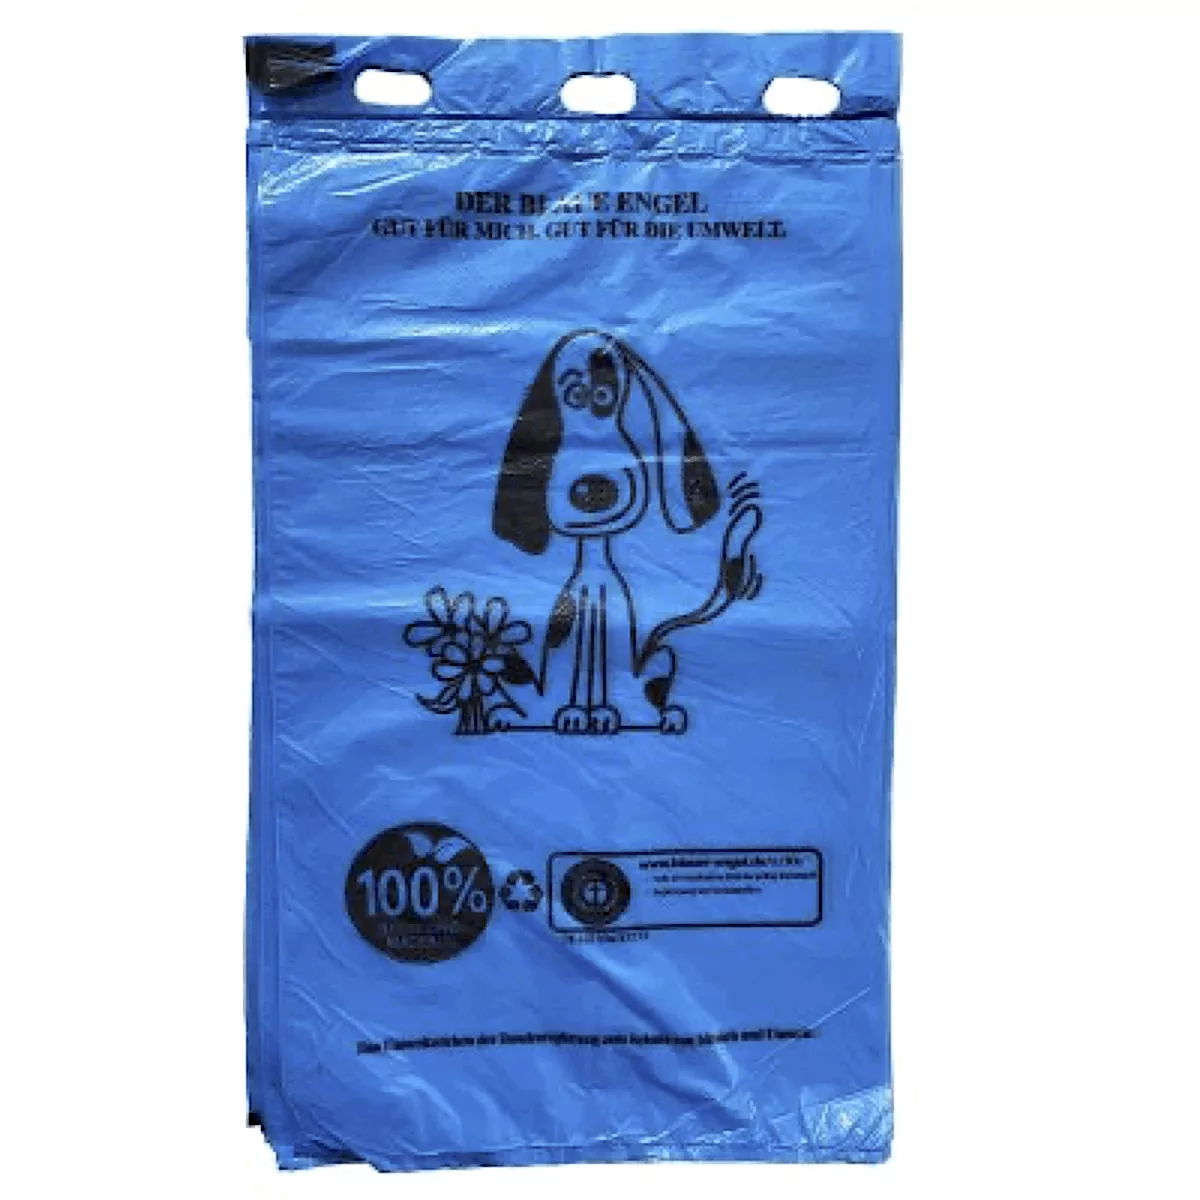 Hundekotbeutel Br. 200 x L. 345 mm, Dicke 20µ, blau, geblockt, (VE 10.000 Beutel)